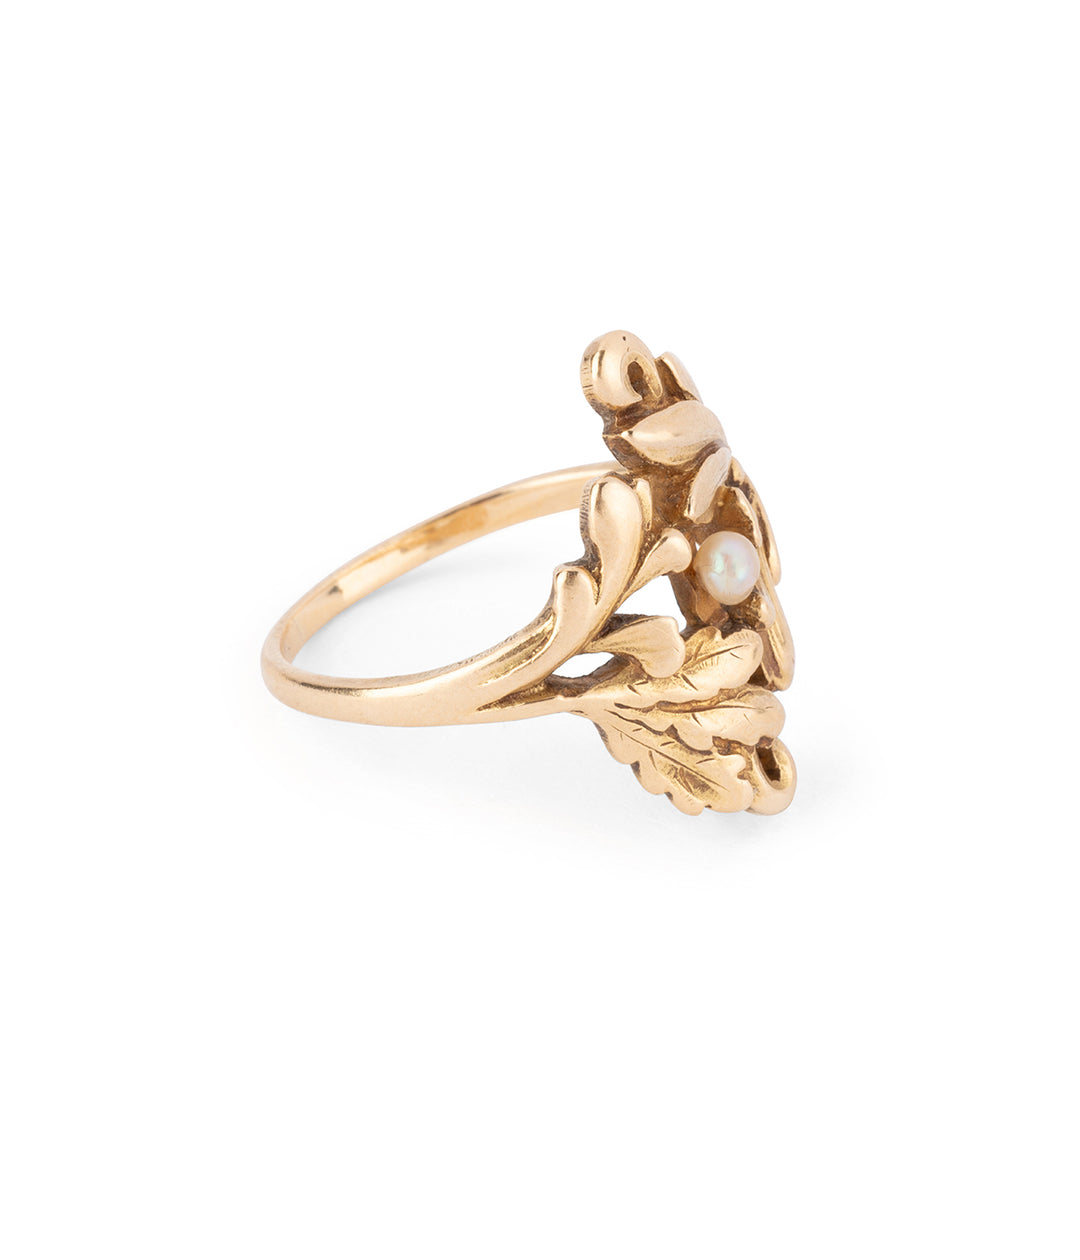 Antique pearl 18k gold ring "Heia" - Caillou Paris